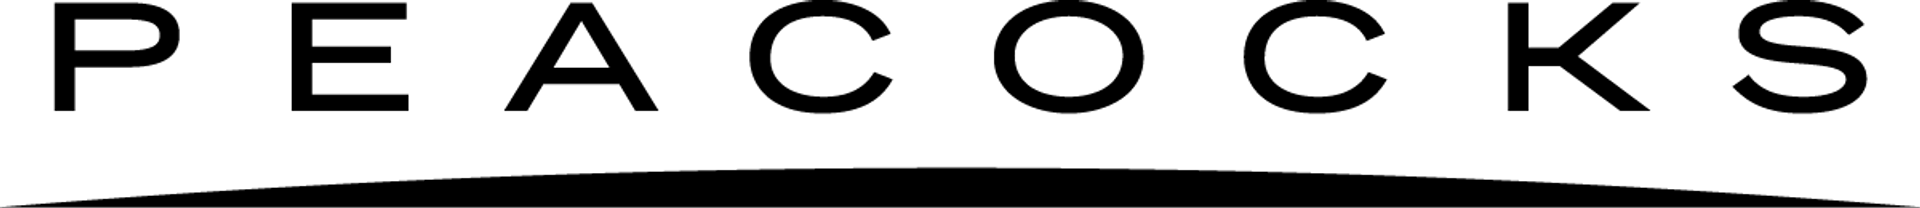 PEACOCKS logo. Current catalogue